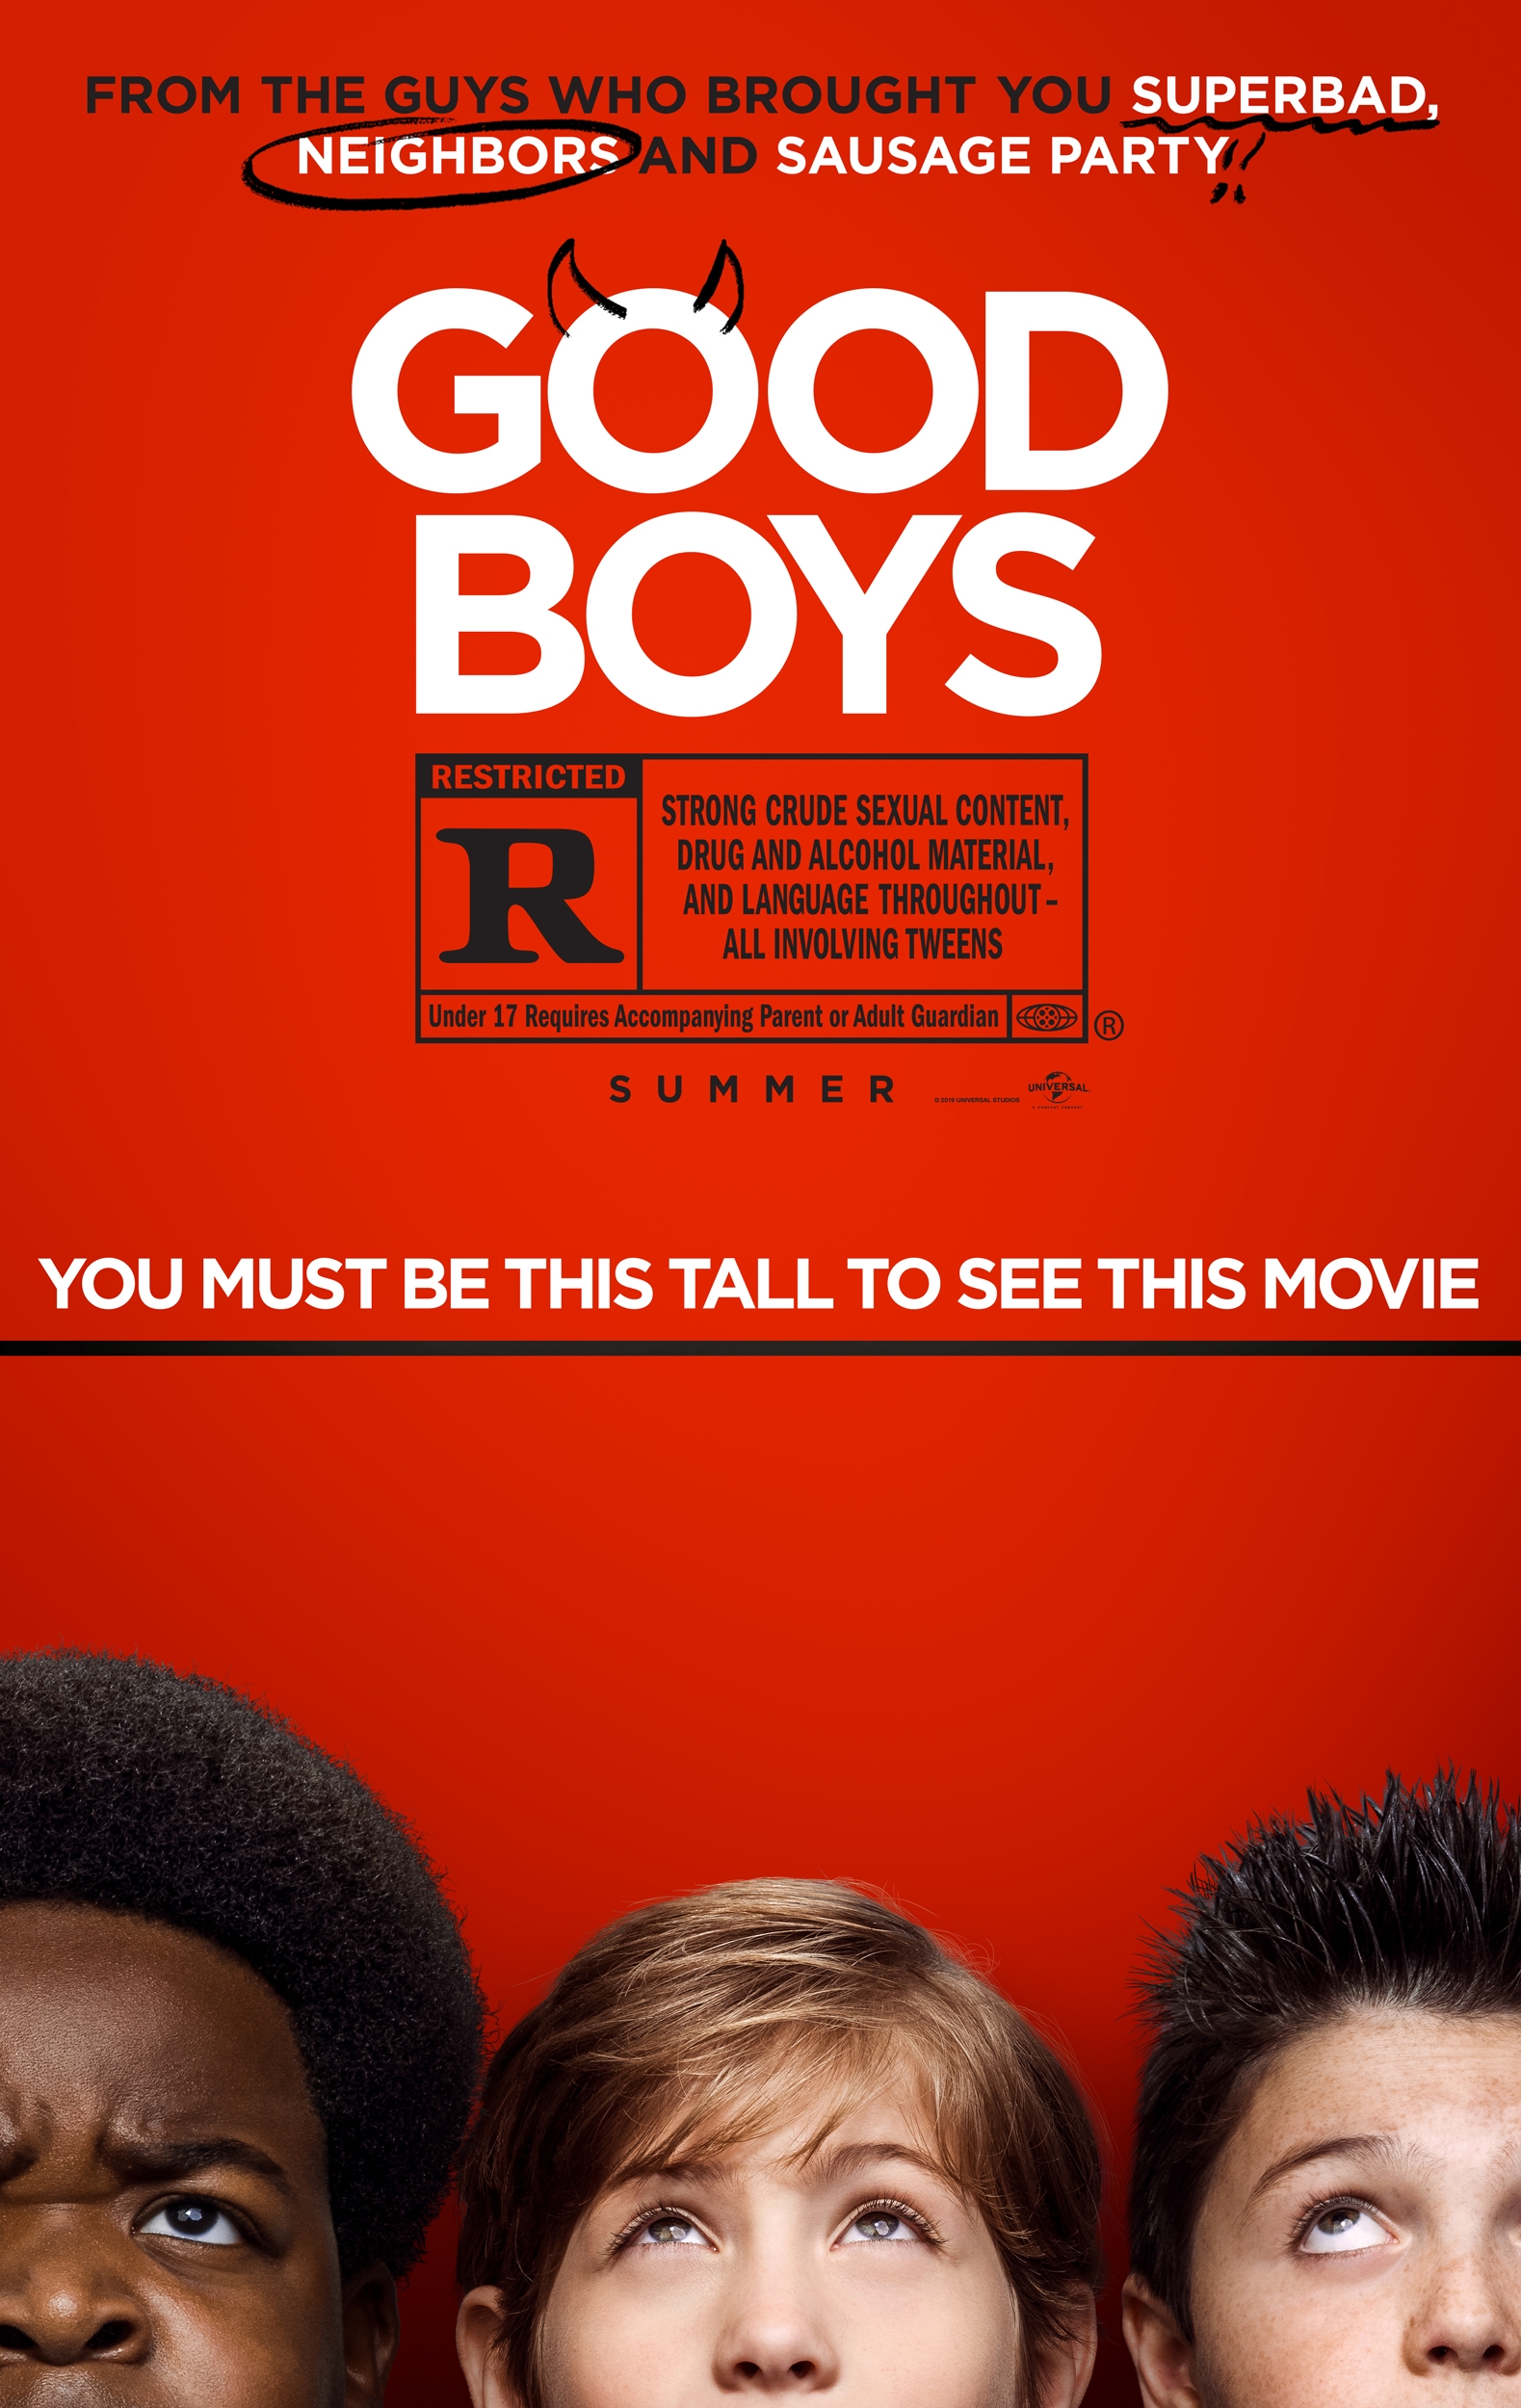 Good Boys Poster. February 28